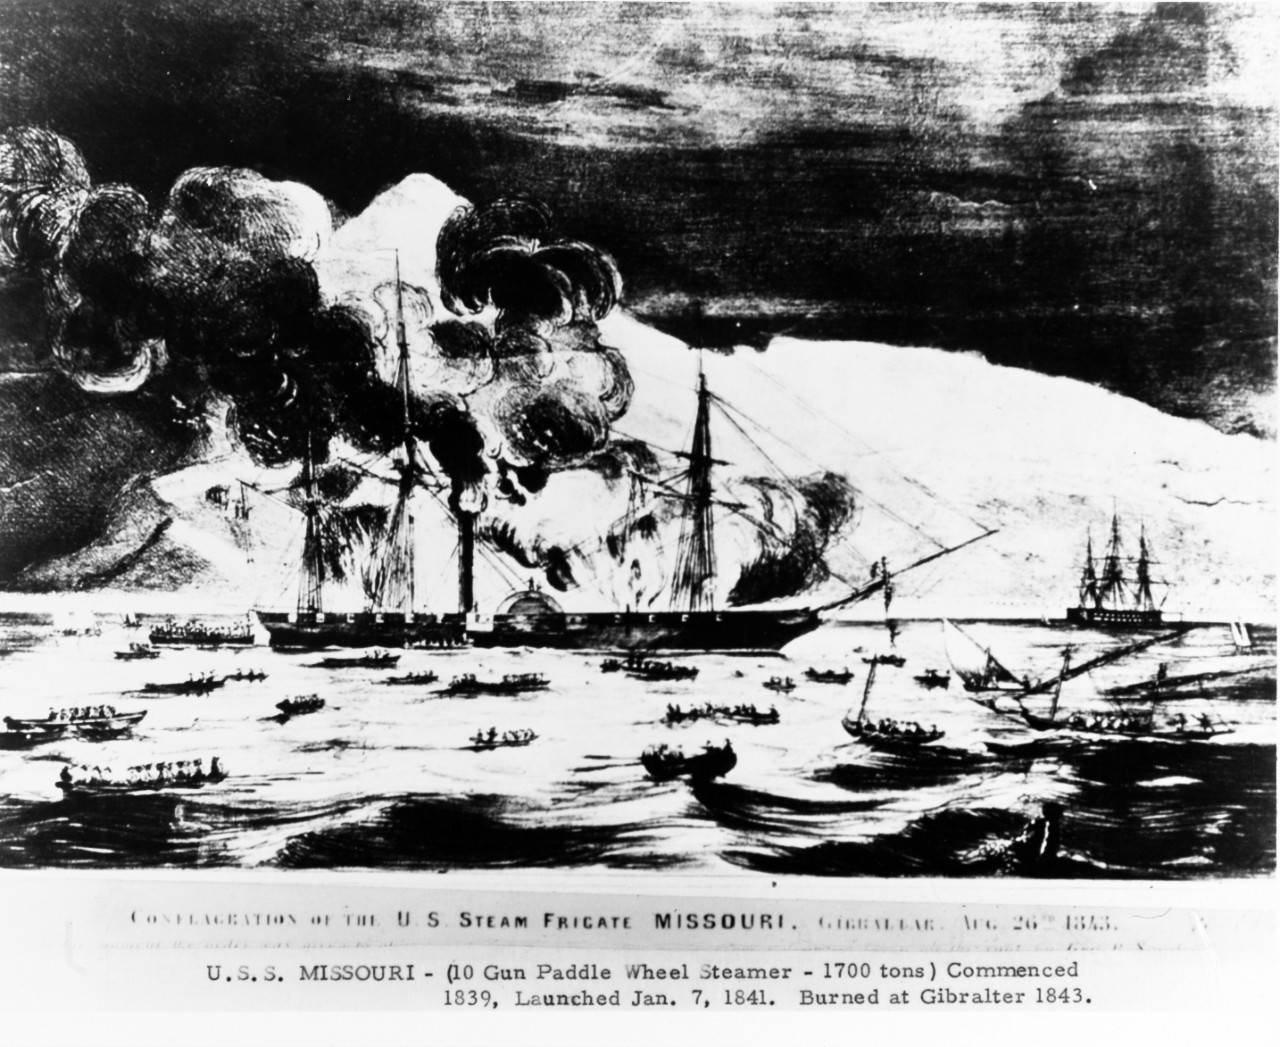 USS MISSOURI (1842-1843) burning at Gibraltar, August 26-27, 1843.  